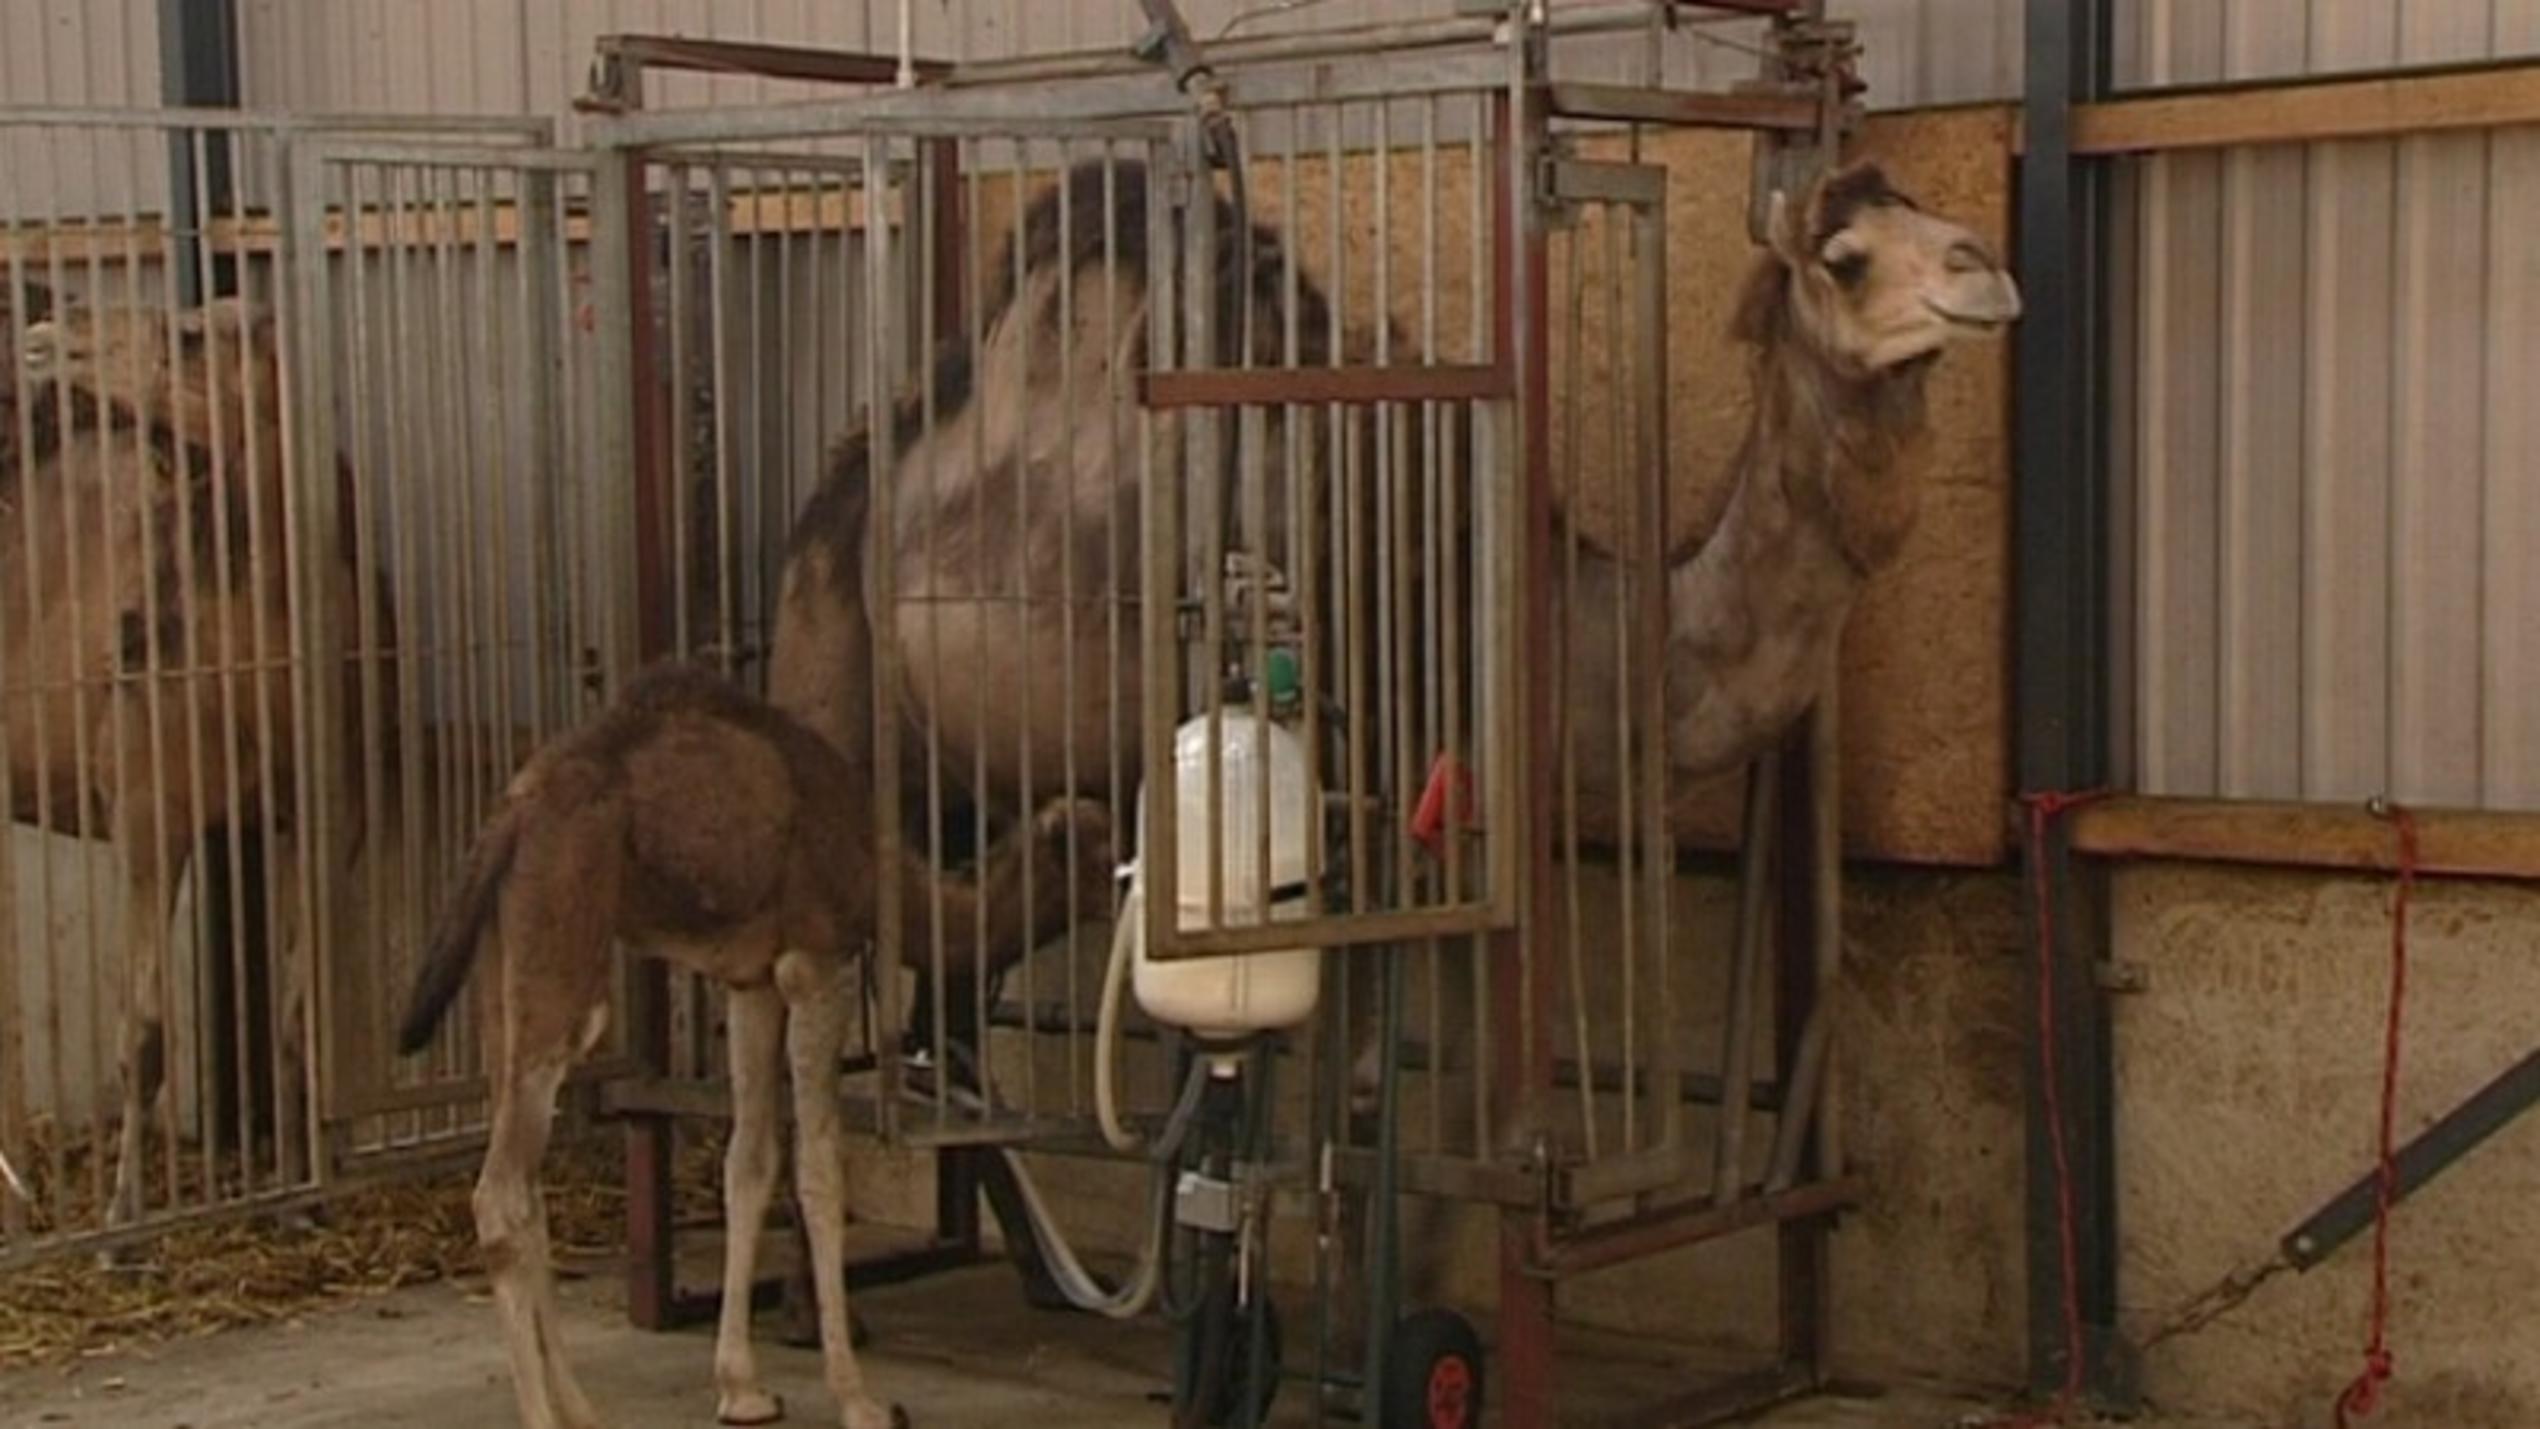 hundkatzemaus: Kamele im Stall